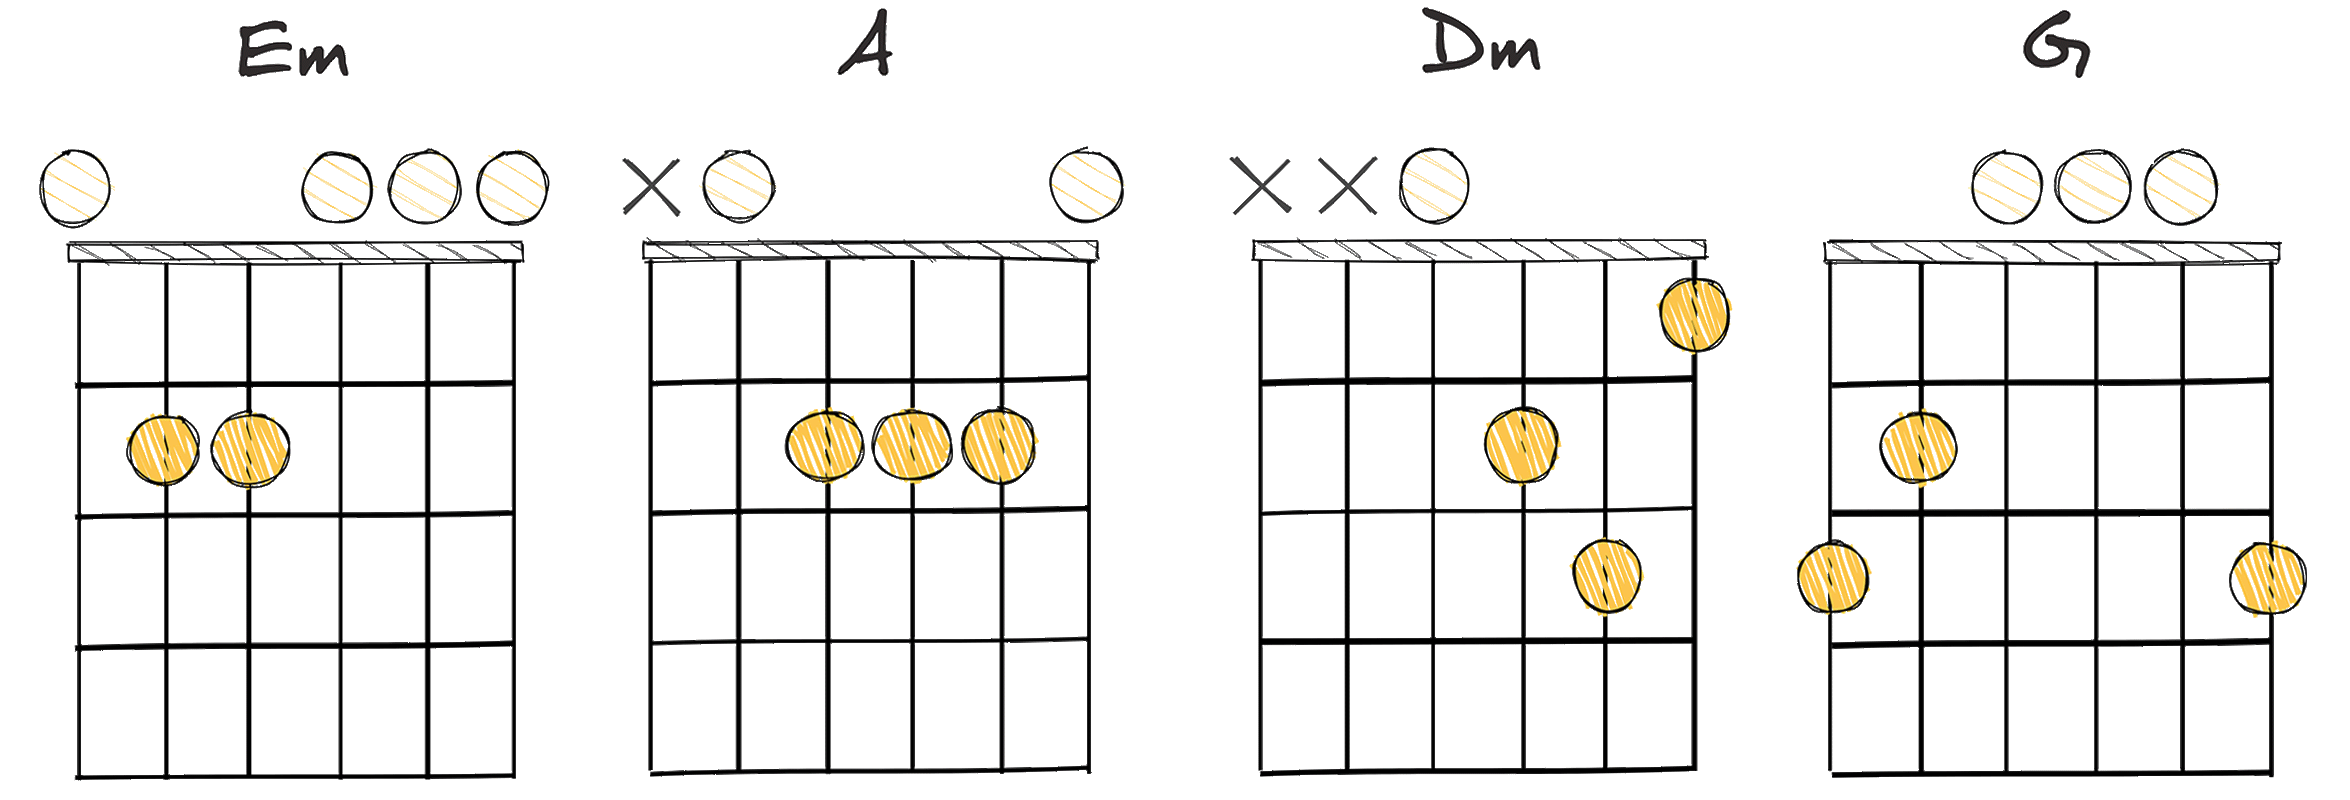 iii-VI-ii-V (3-6-2-5) chords diagram